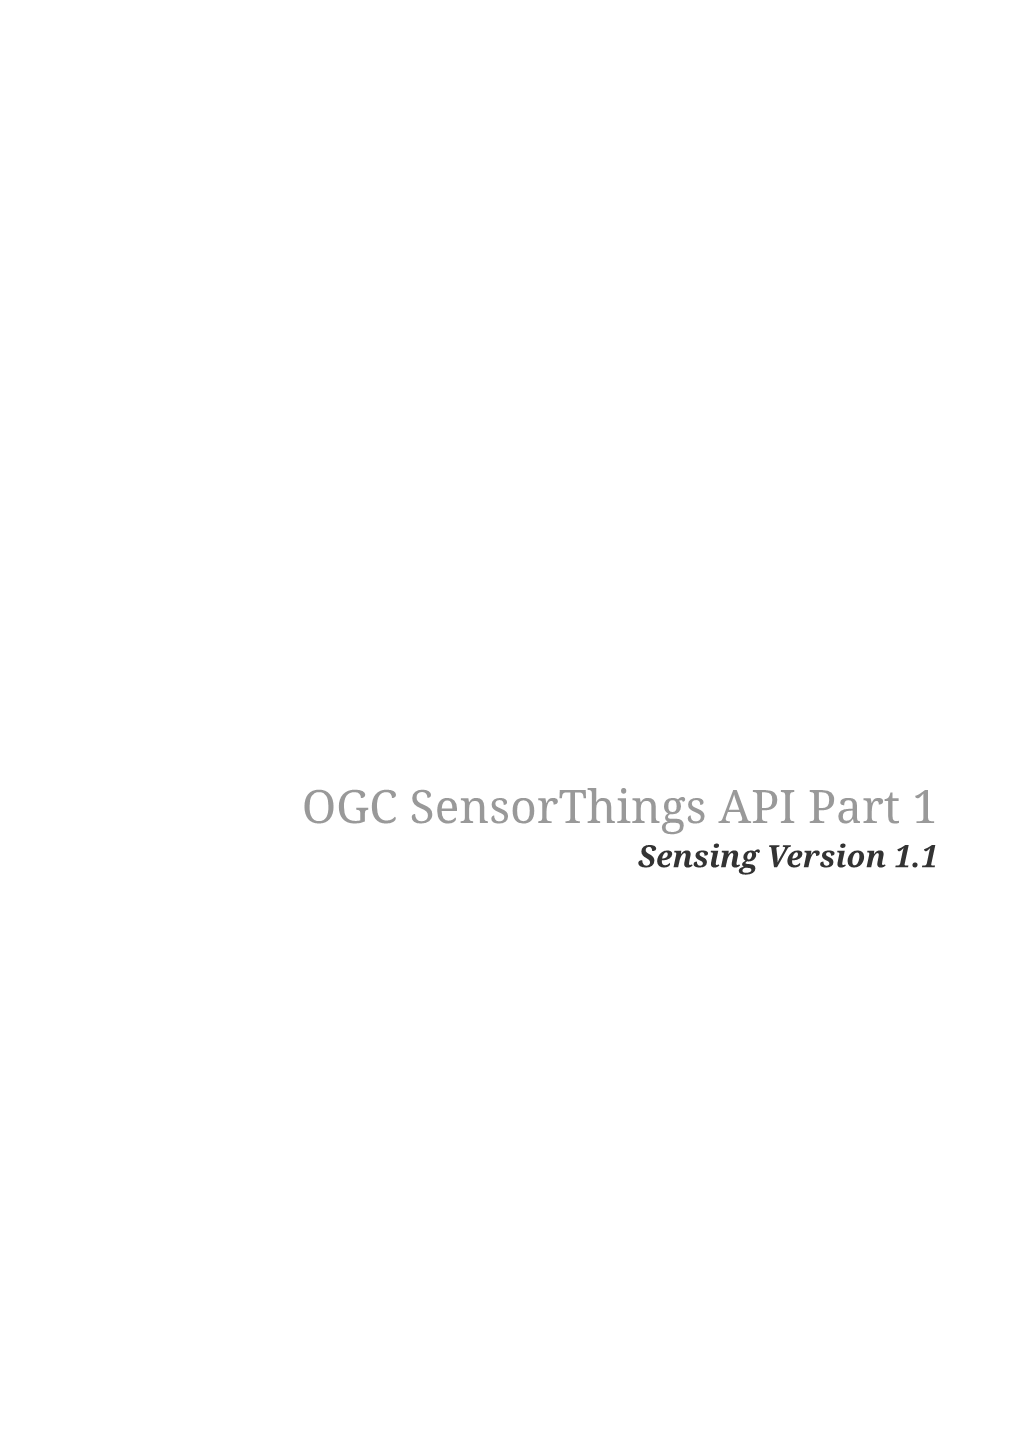 OGC Sensorthings API Part 1 Sensing Version 1.1 Open Geospatial Consortium